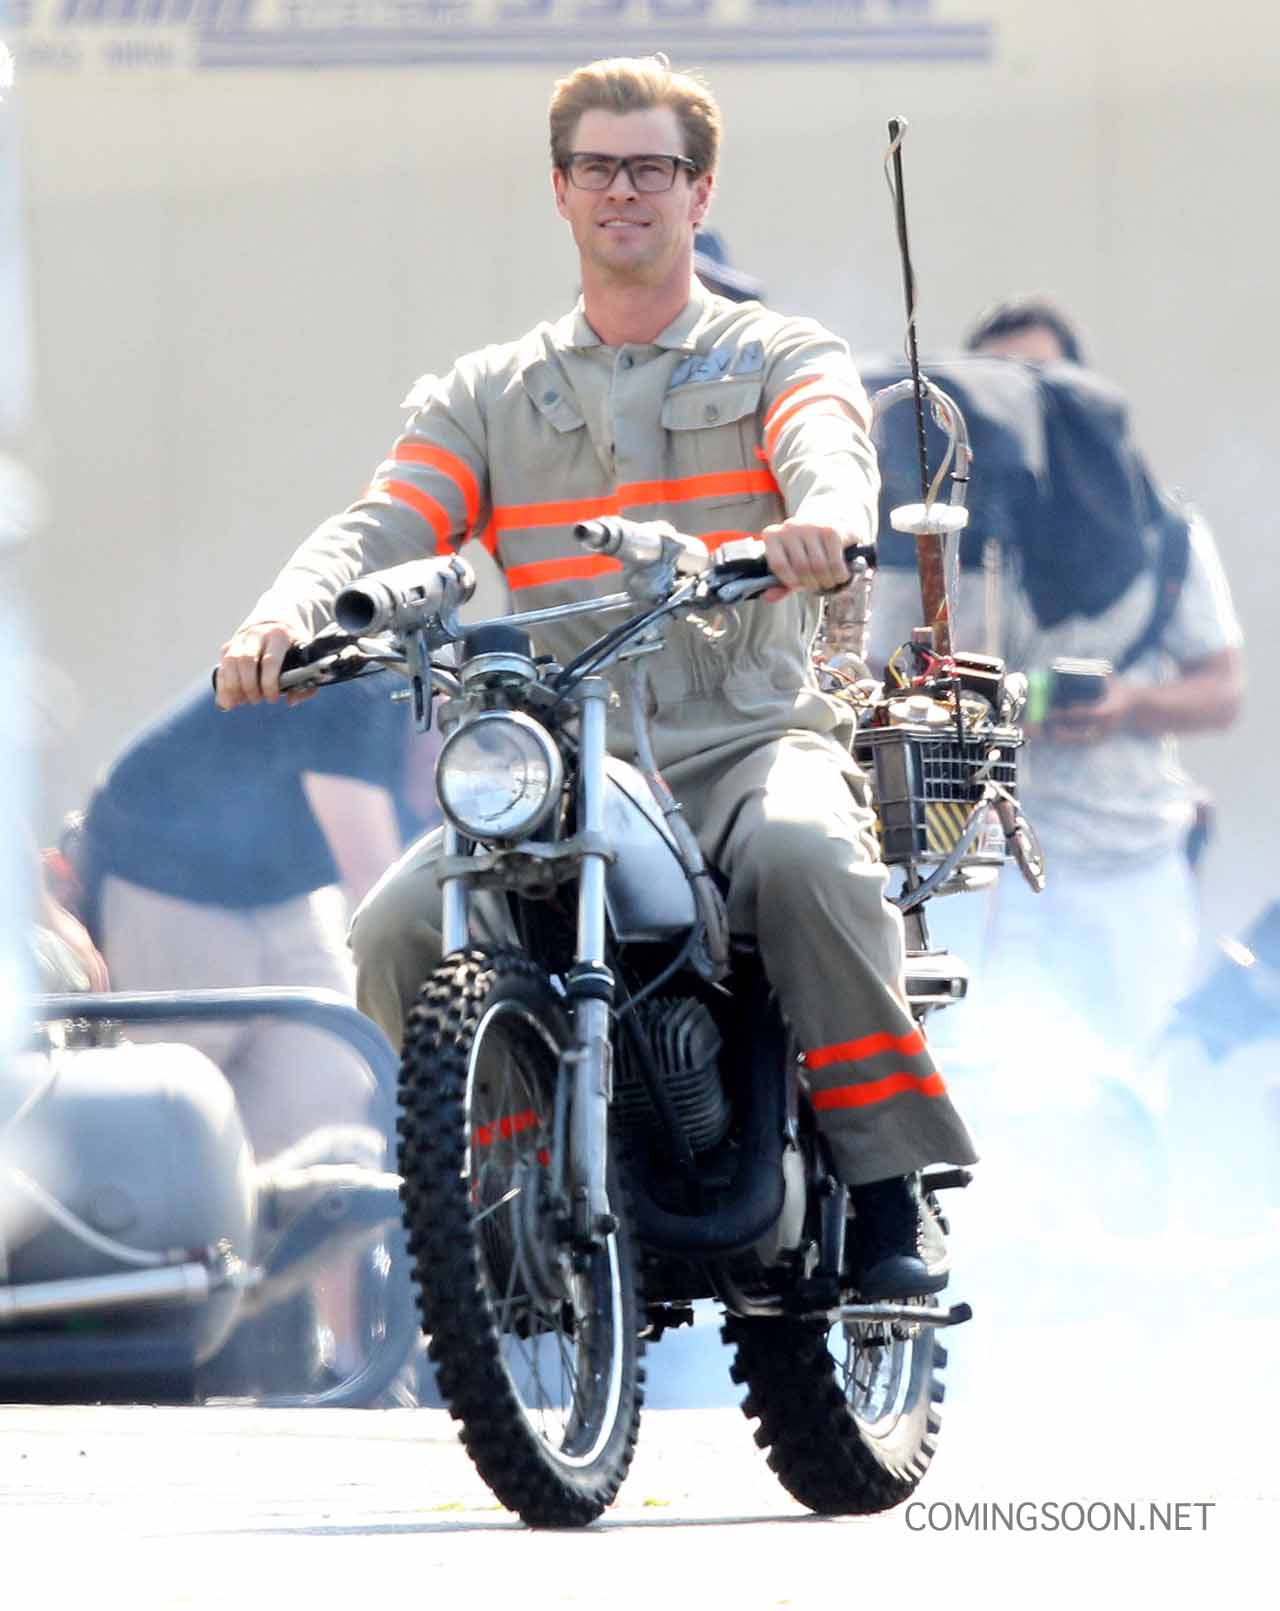 Chris Hemsworth on Ghostbusters Set